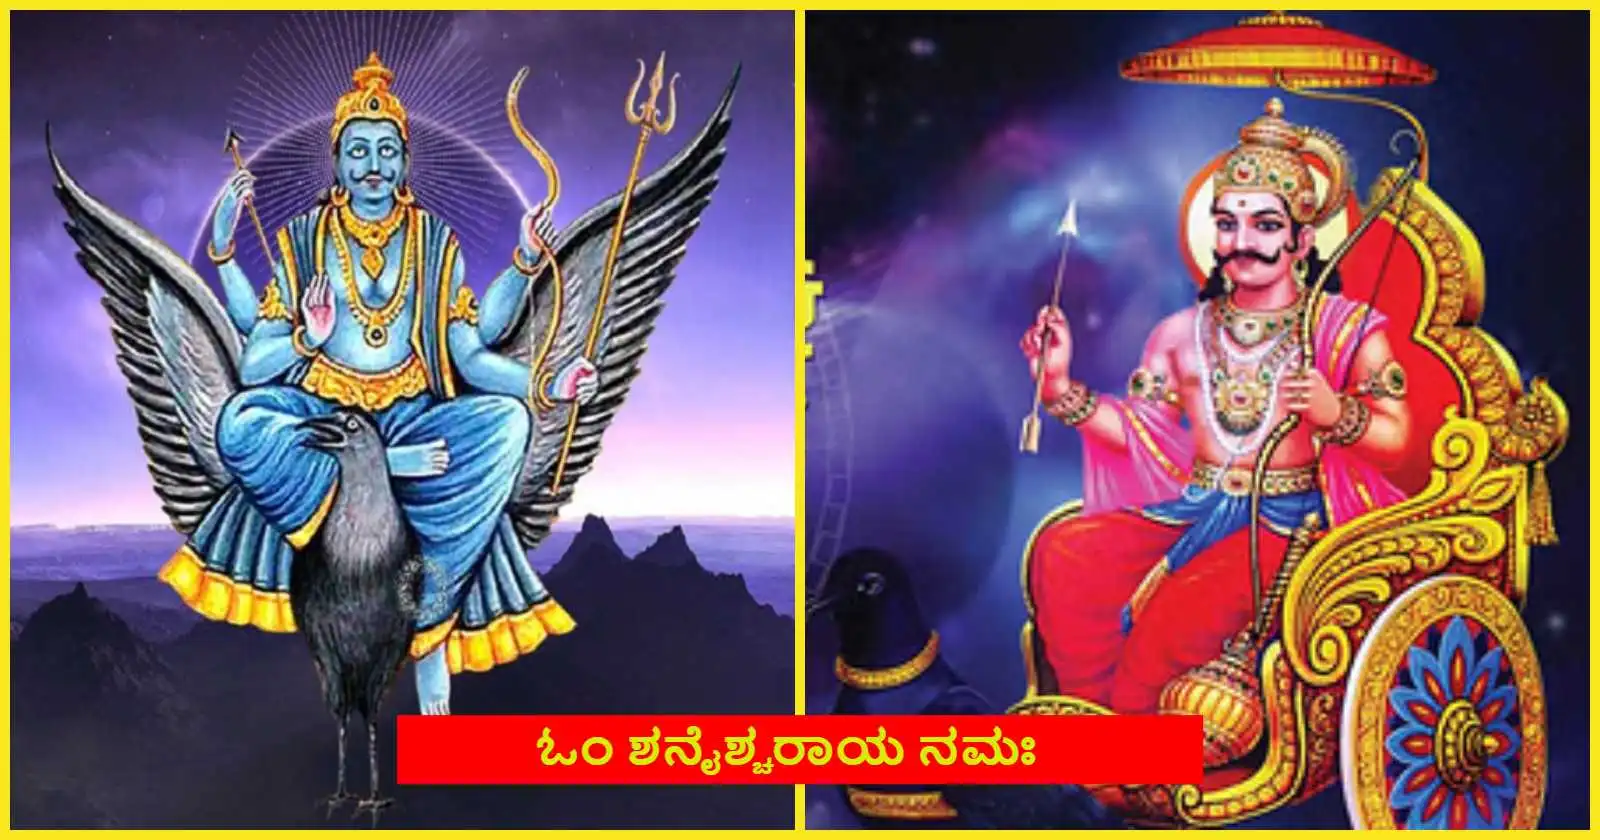 Kannada Horoscope predictions on Shani Dev Transit- These zodiac signs will get benefits from Shani Transit.